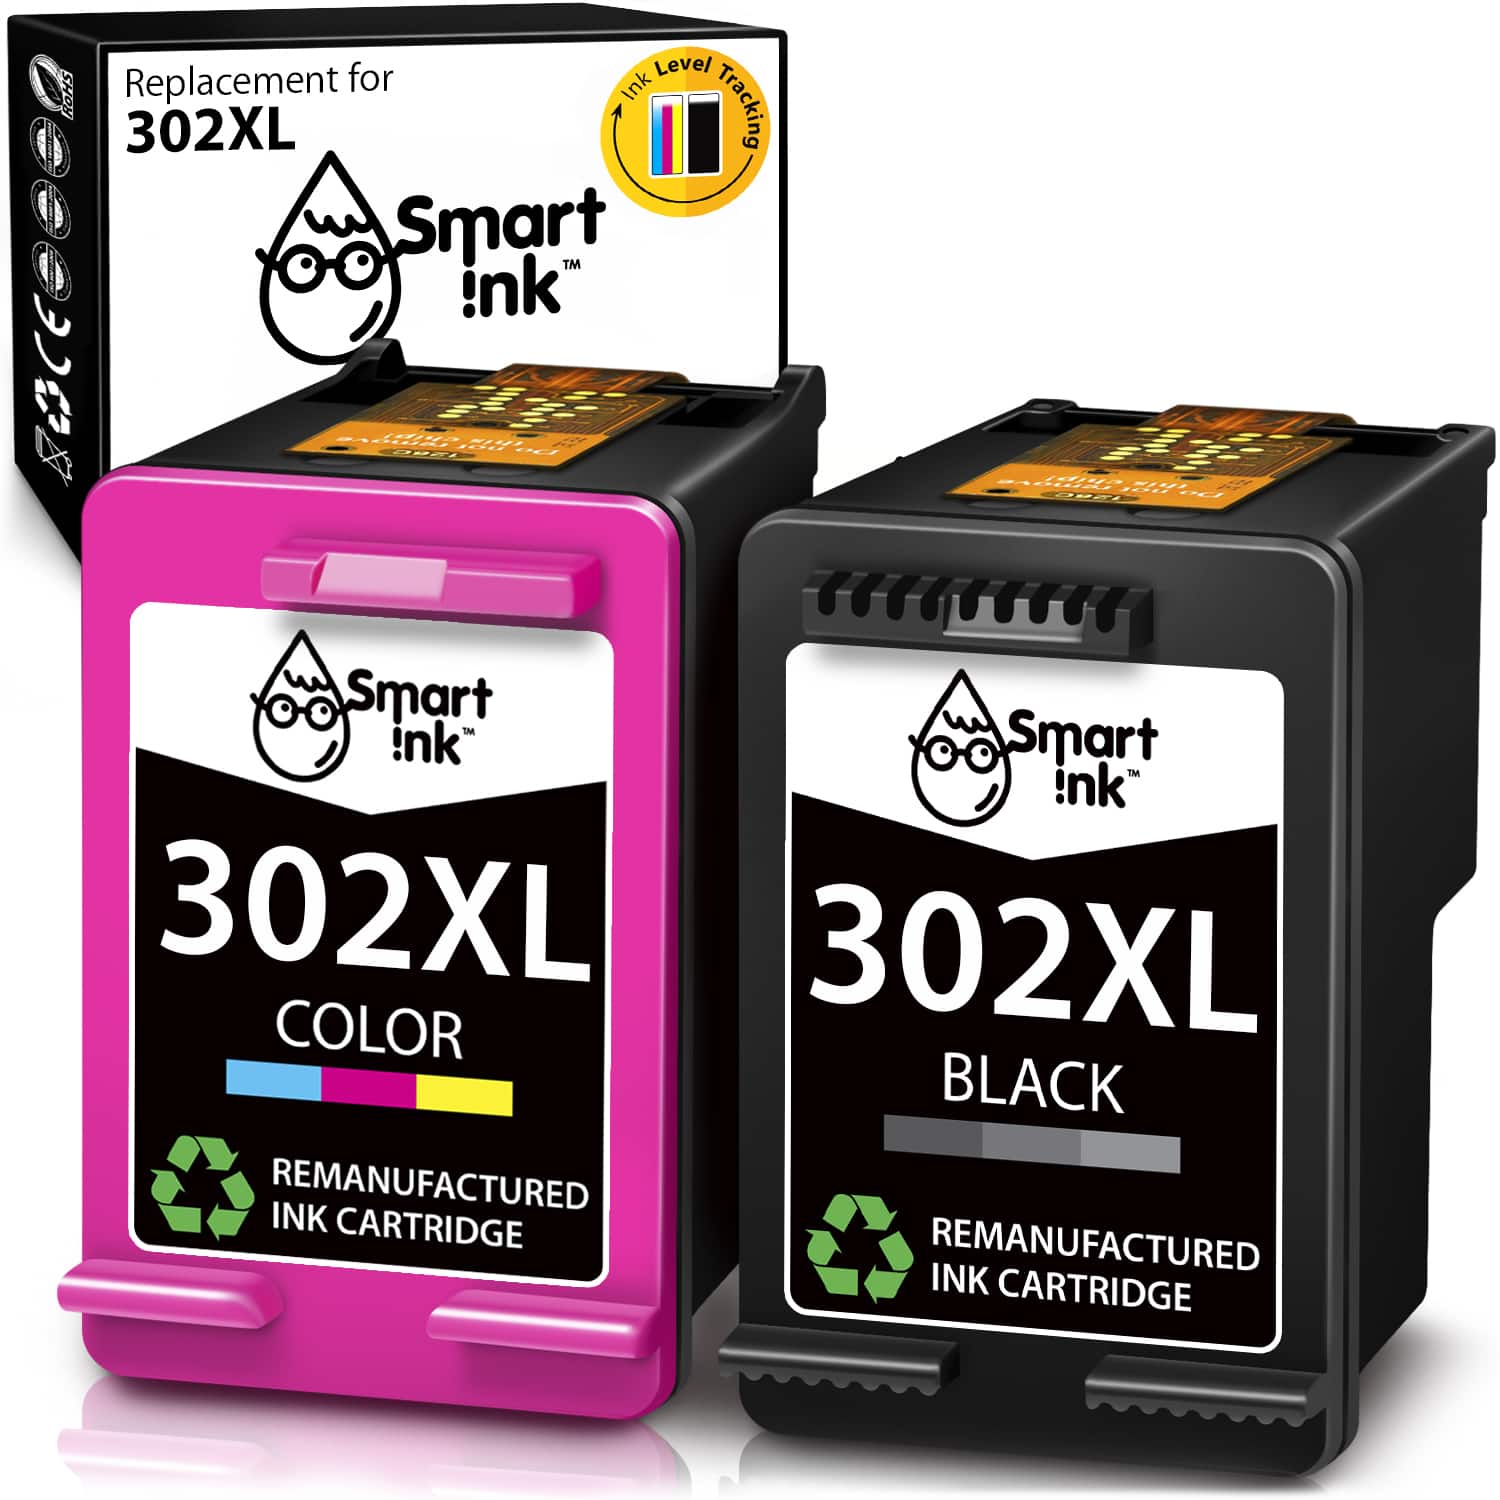 HP 302 XL Replacement Ink Cartridges Buy HP 302 XL Cartridges in EU